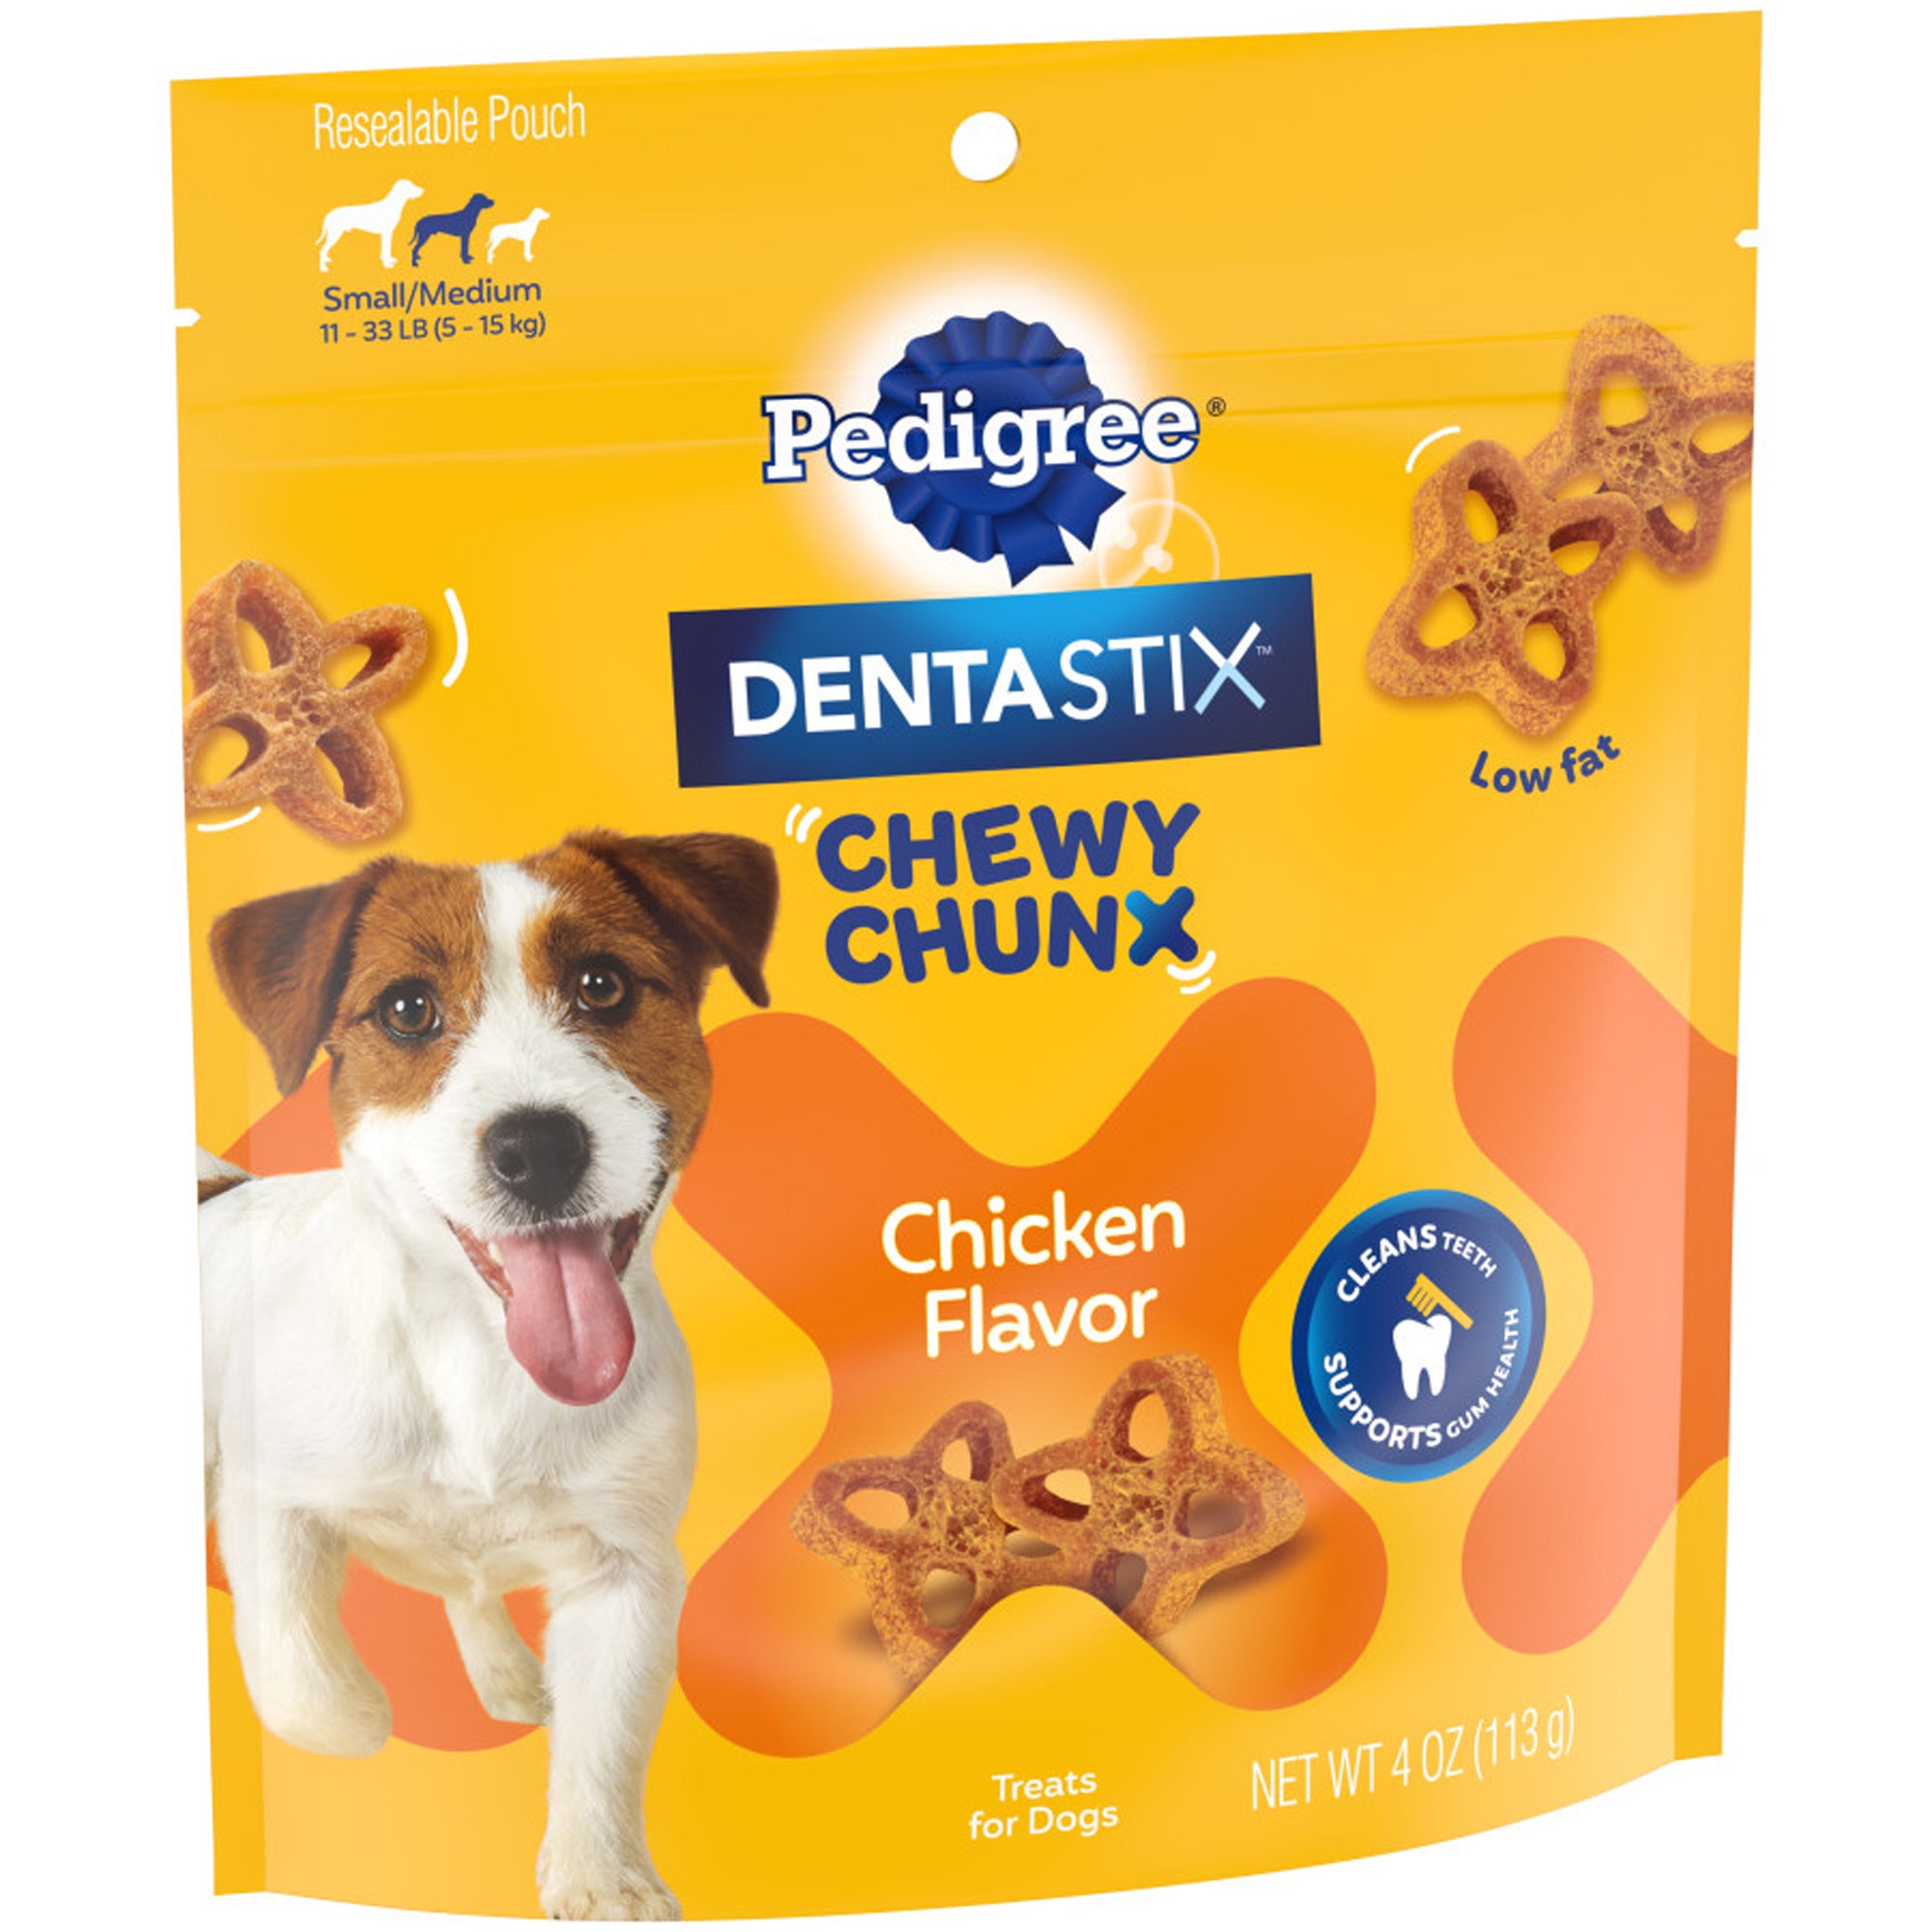 Pedigree Dentastix Chewy Chunx Dog Treat Chicken 4 oz, Small/MD